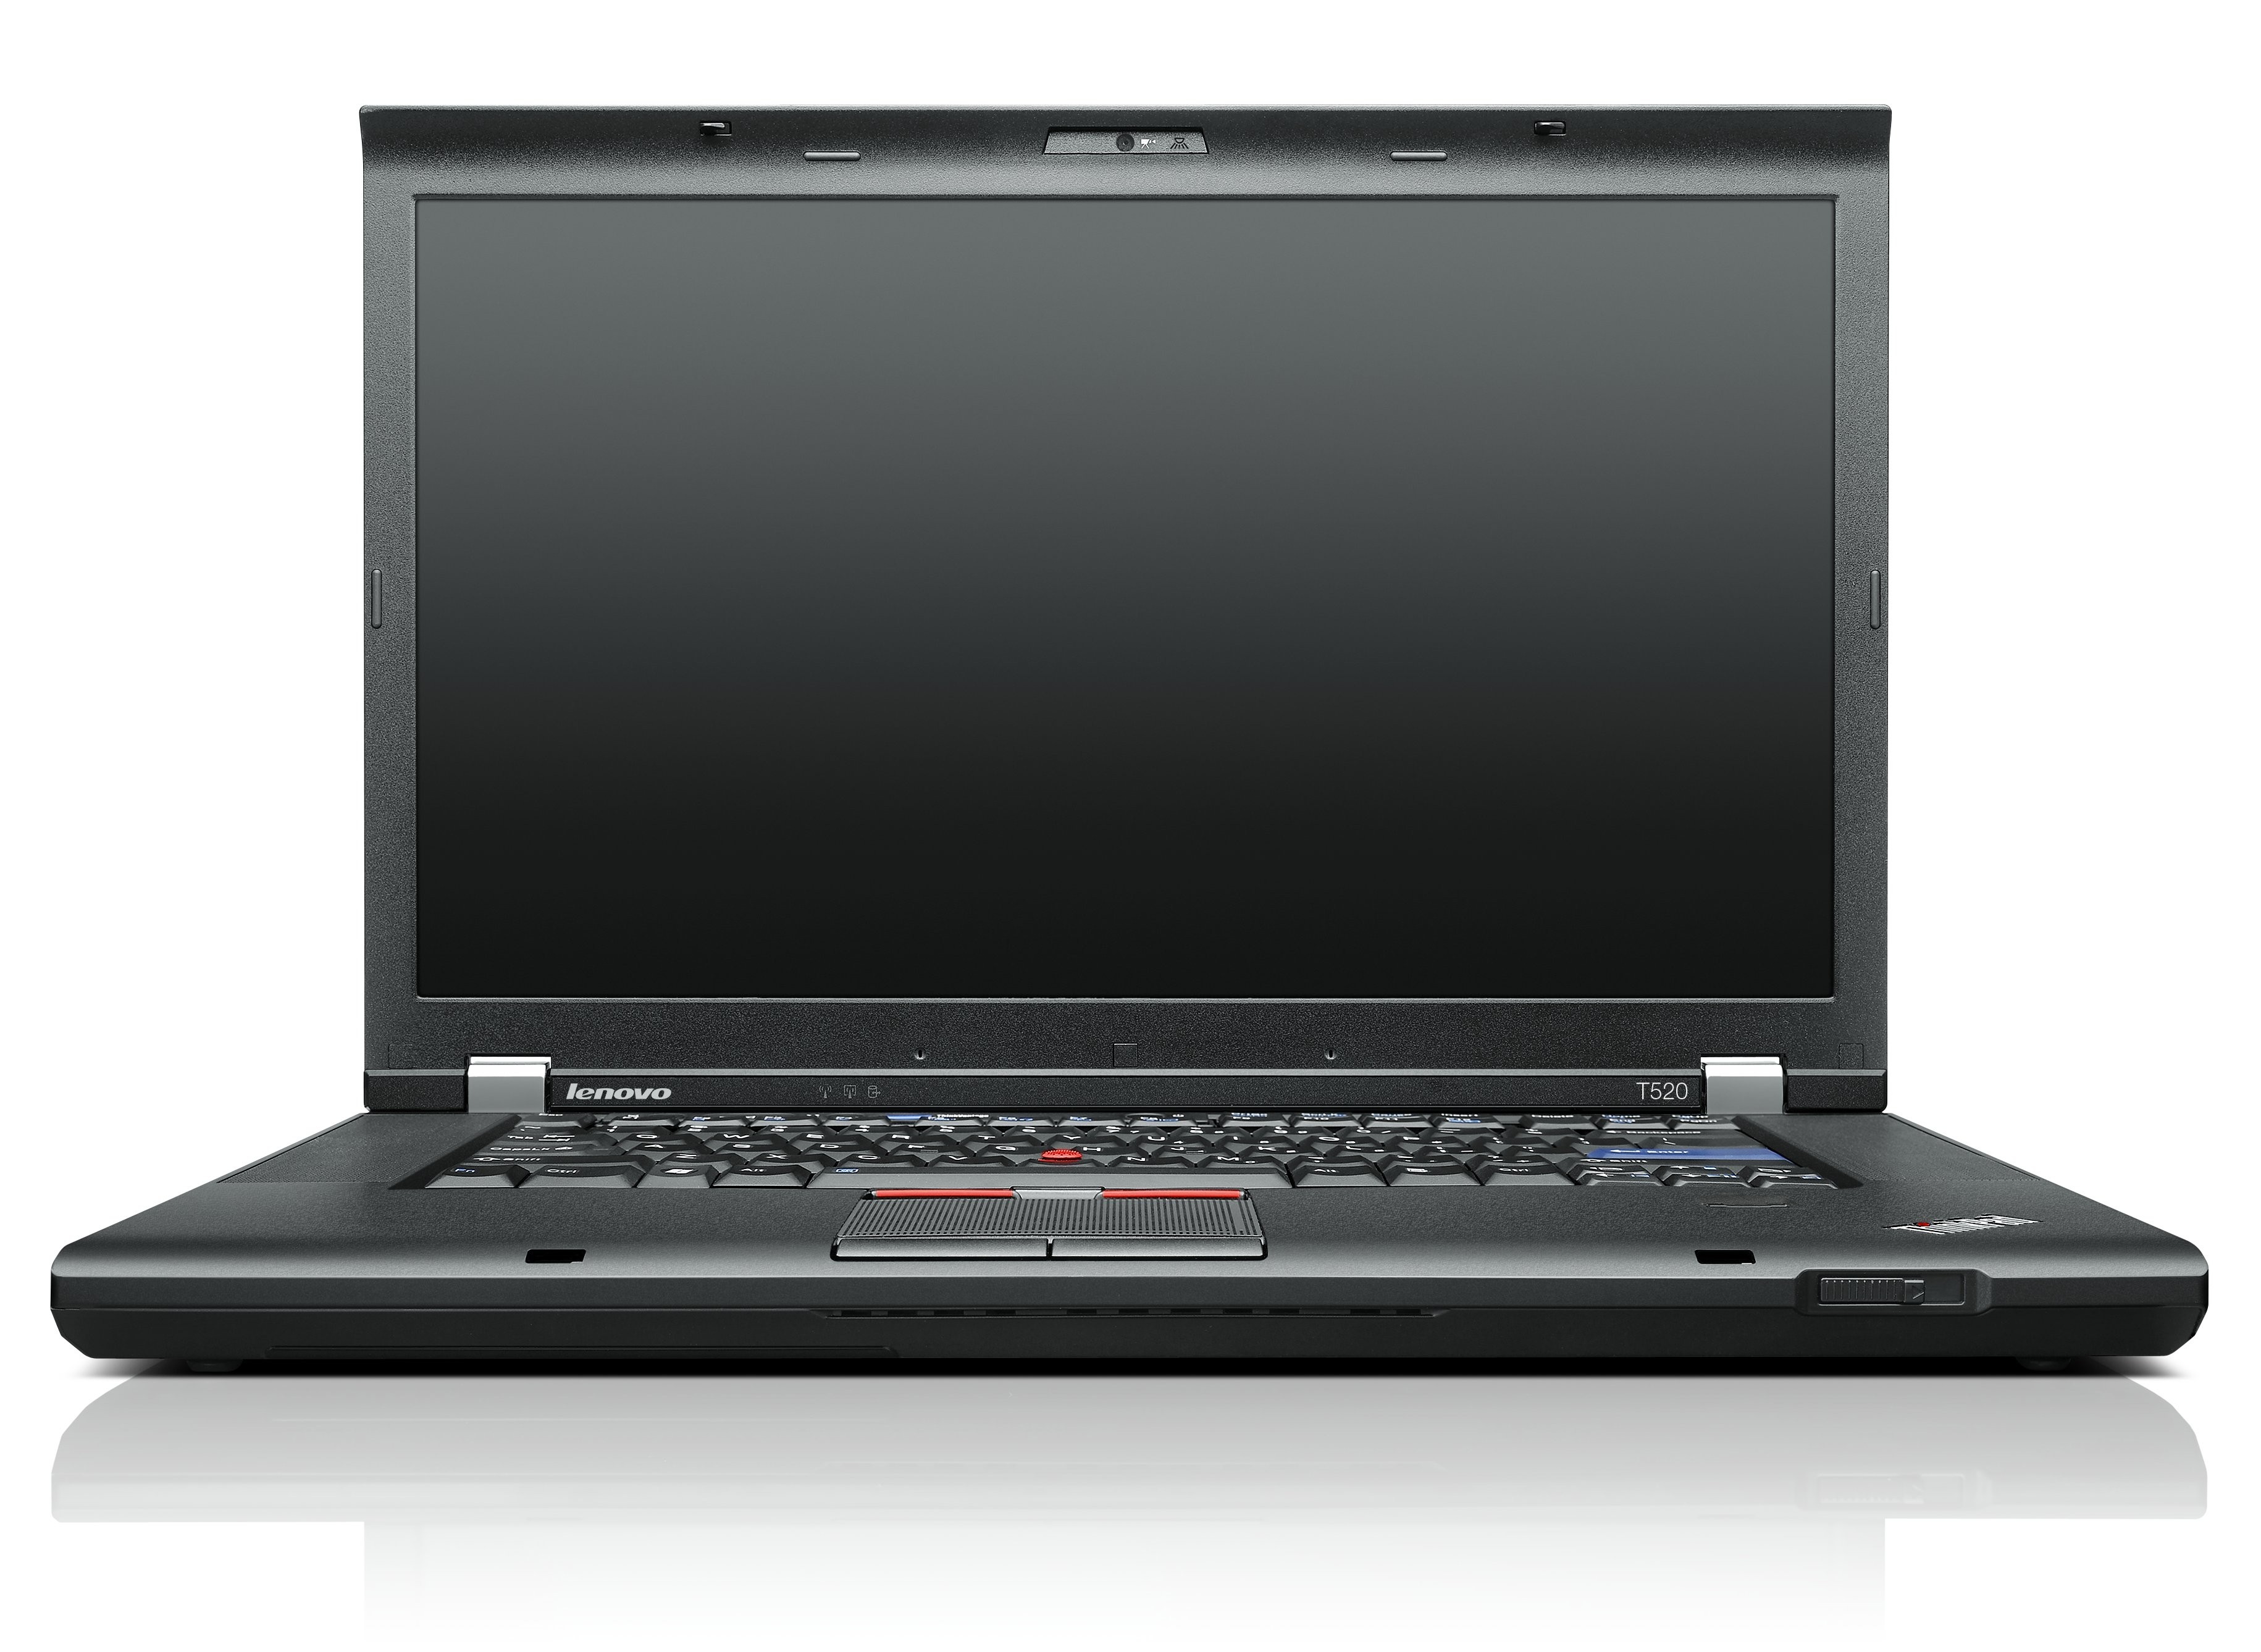 Lenovo ThinkPad T520 15.6" Laptop